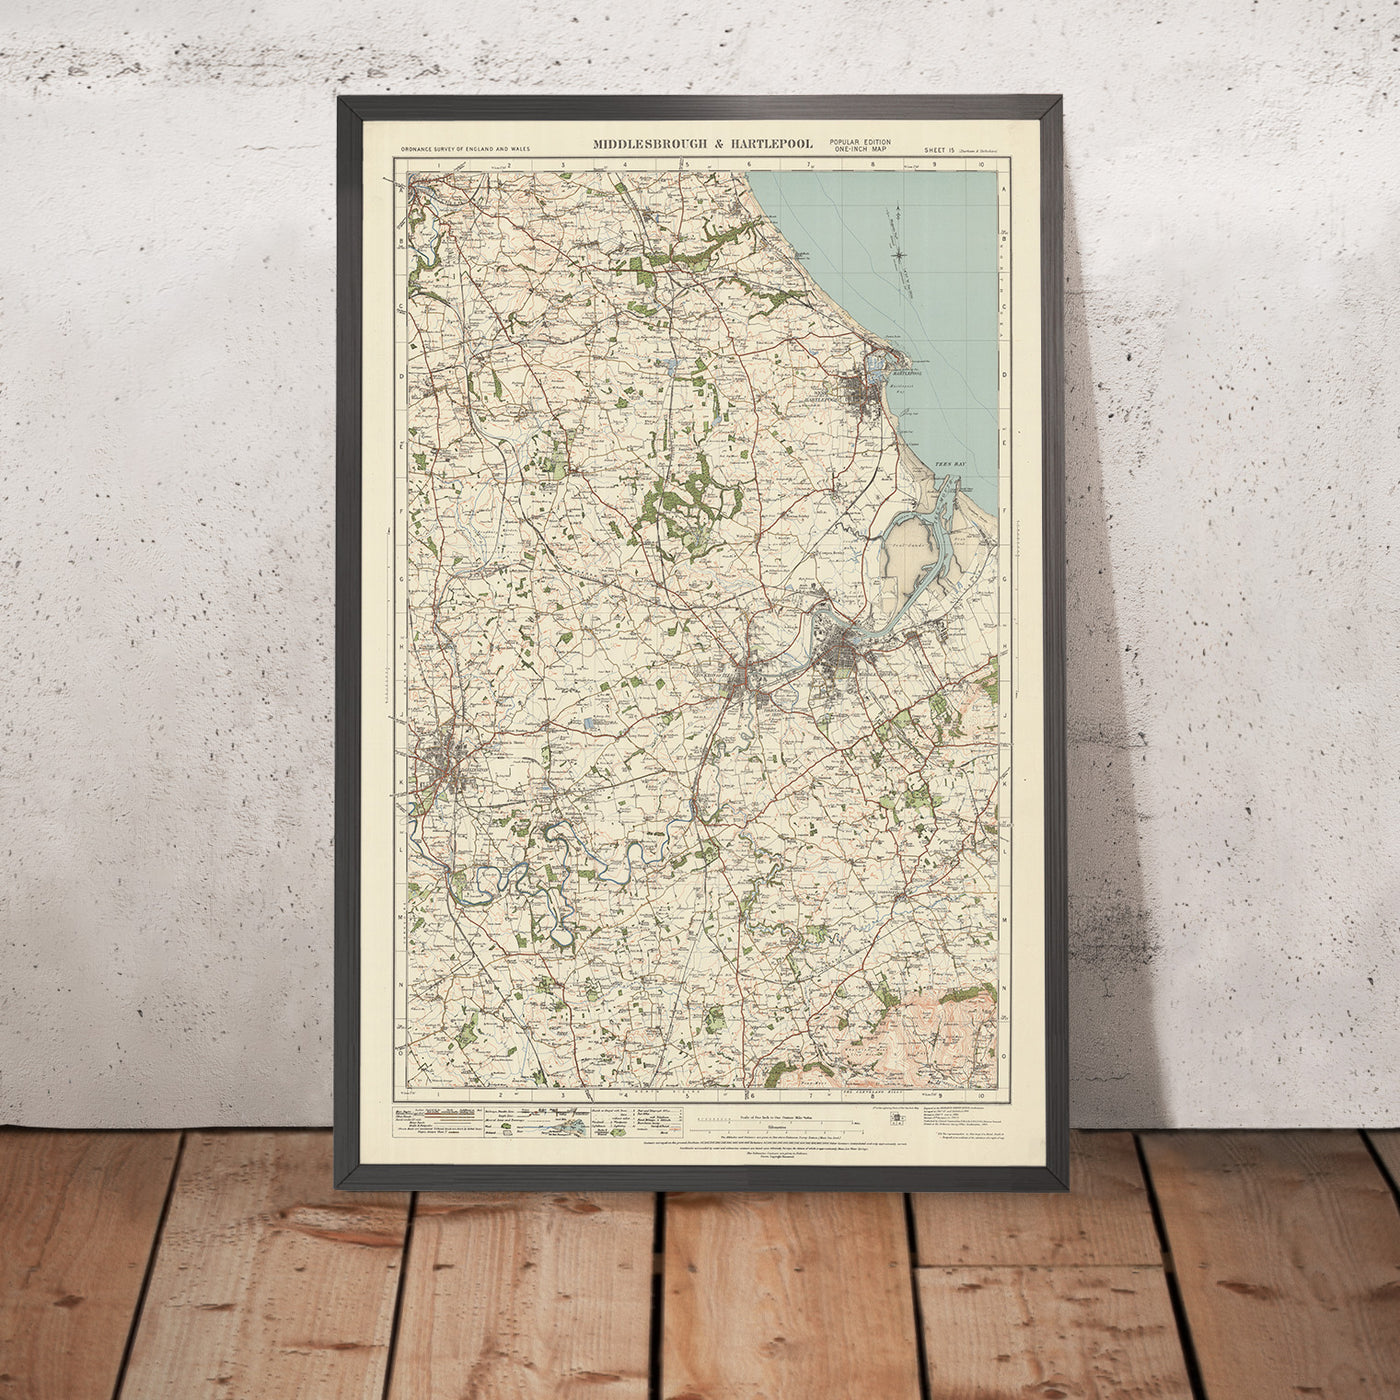 Ancienne carte de l'Ordnance Survey, feuille 15 - Middlesbrough & Hartlepool, 1925 : Durham, Thornaby, Seaton Carew, Darlington, Stockton-on-Tees